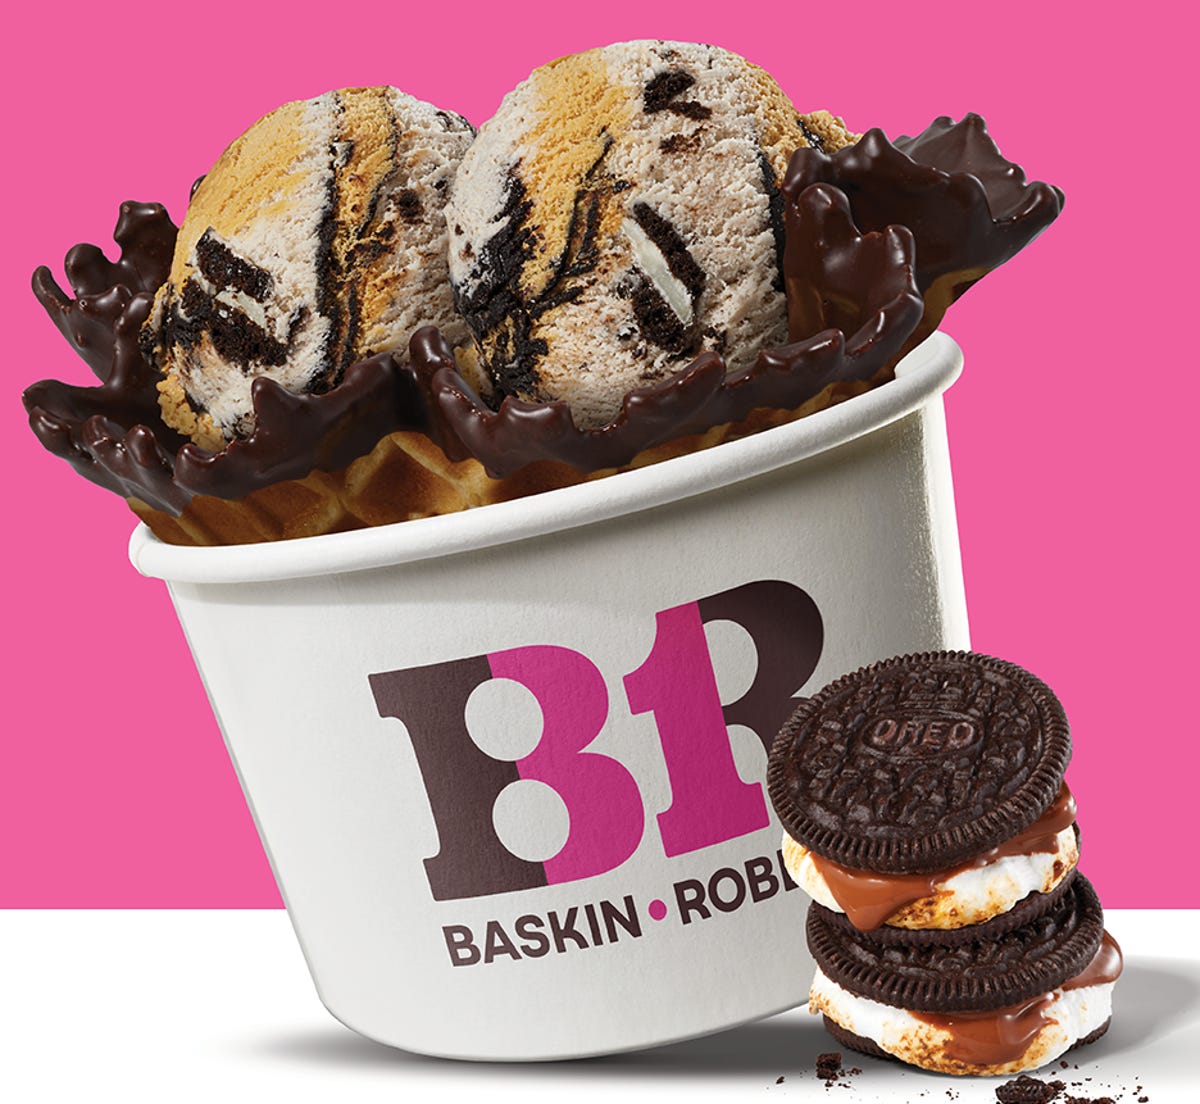 Baskin-Robbins new Oreo S'mores flavor